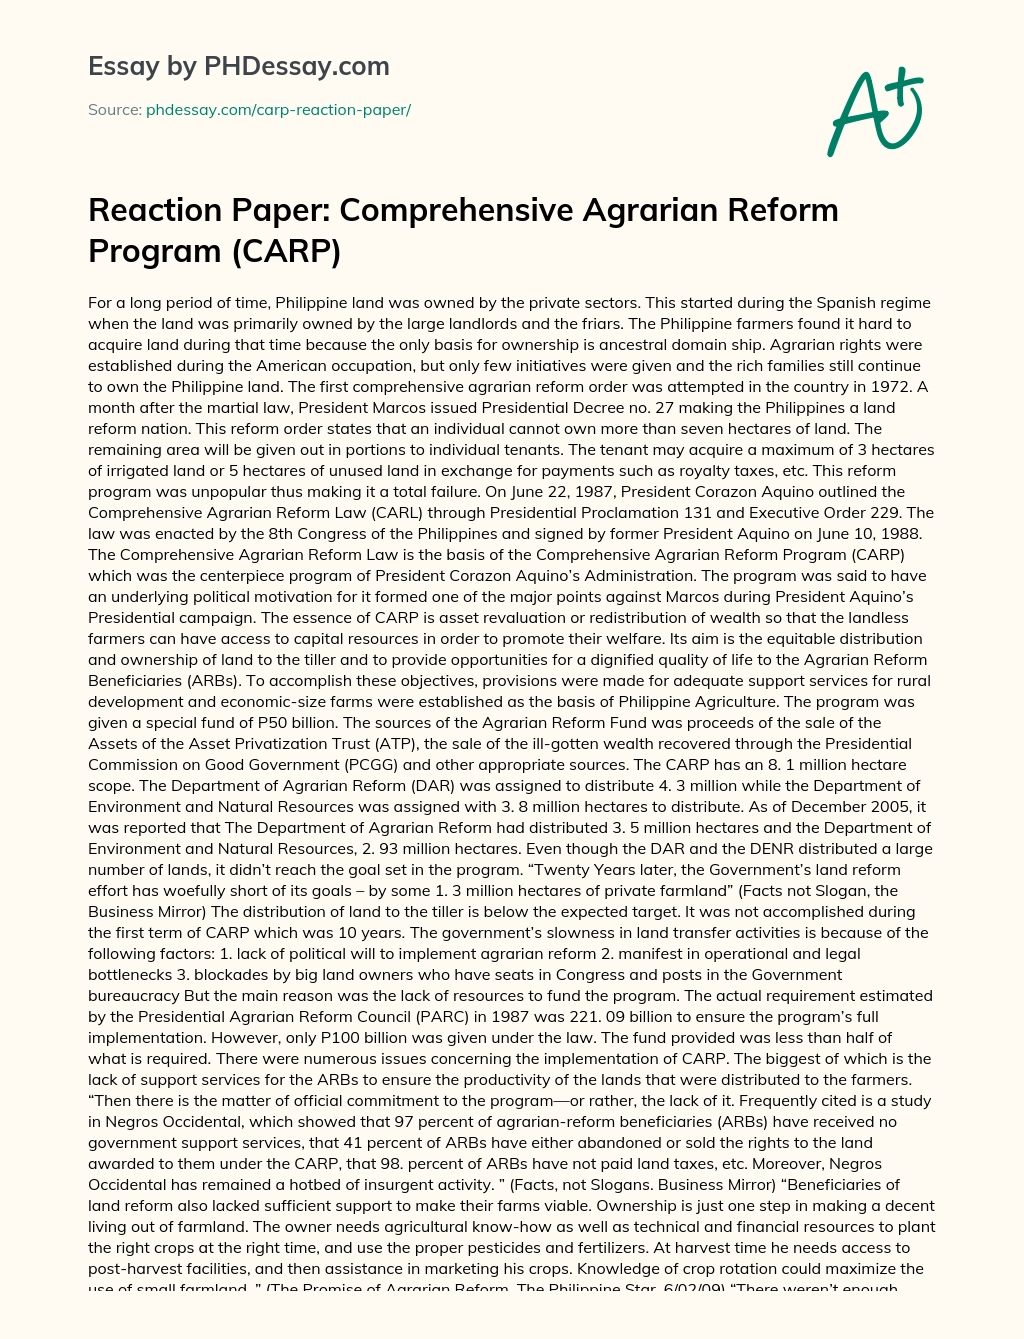 Reaction Paper: Comprehensive Agrarian Reform Program (CARP) essay